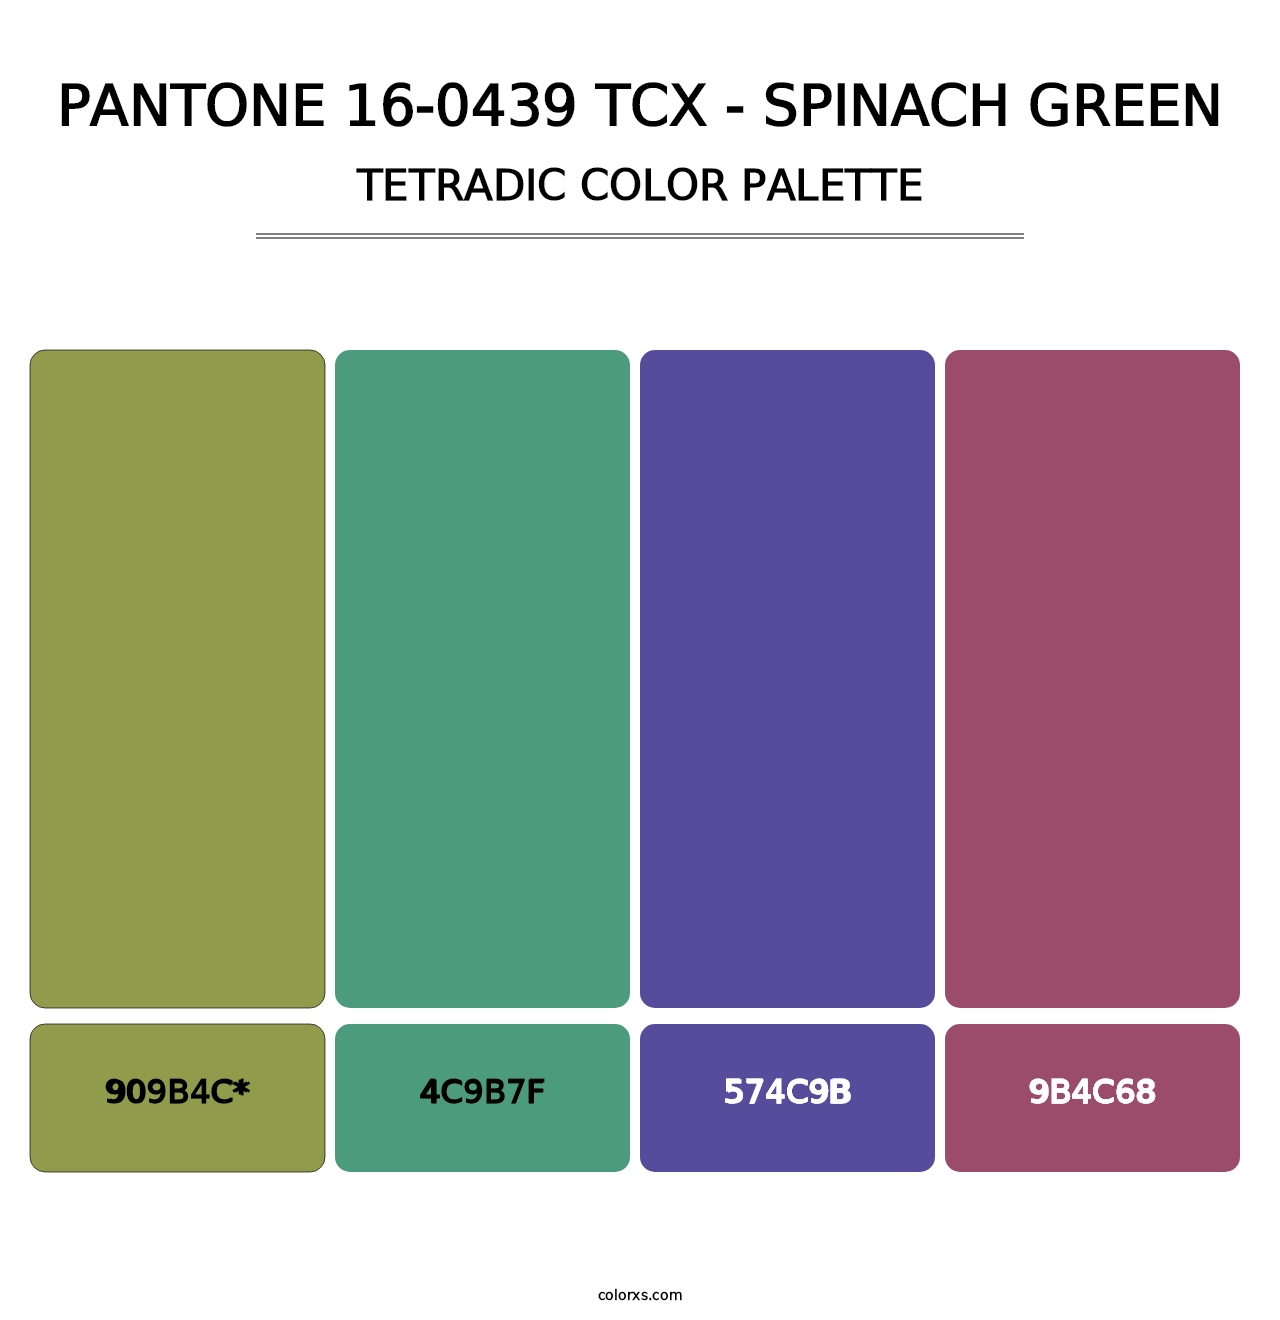 PANTONE 16-0439 TCX - Spinach Green - Tetradic Color Palette